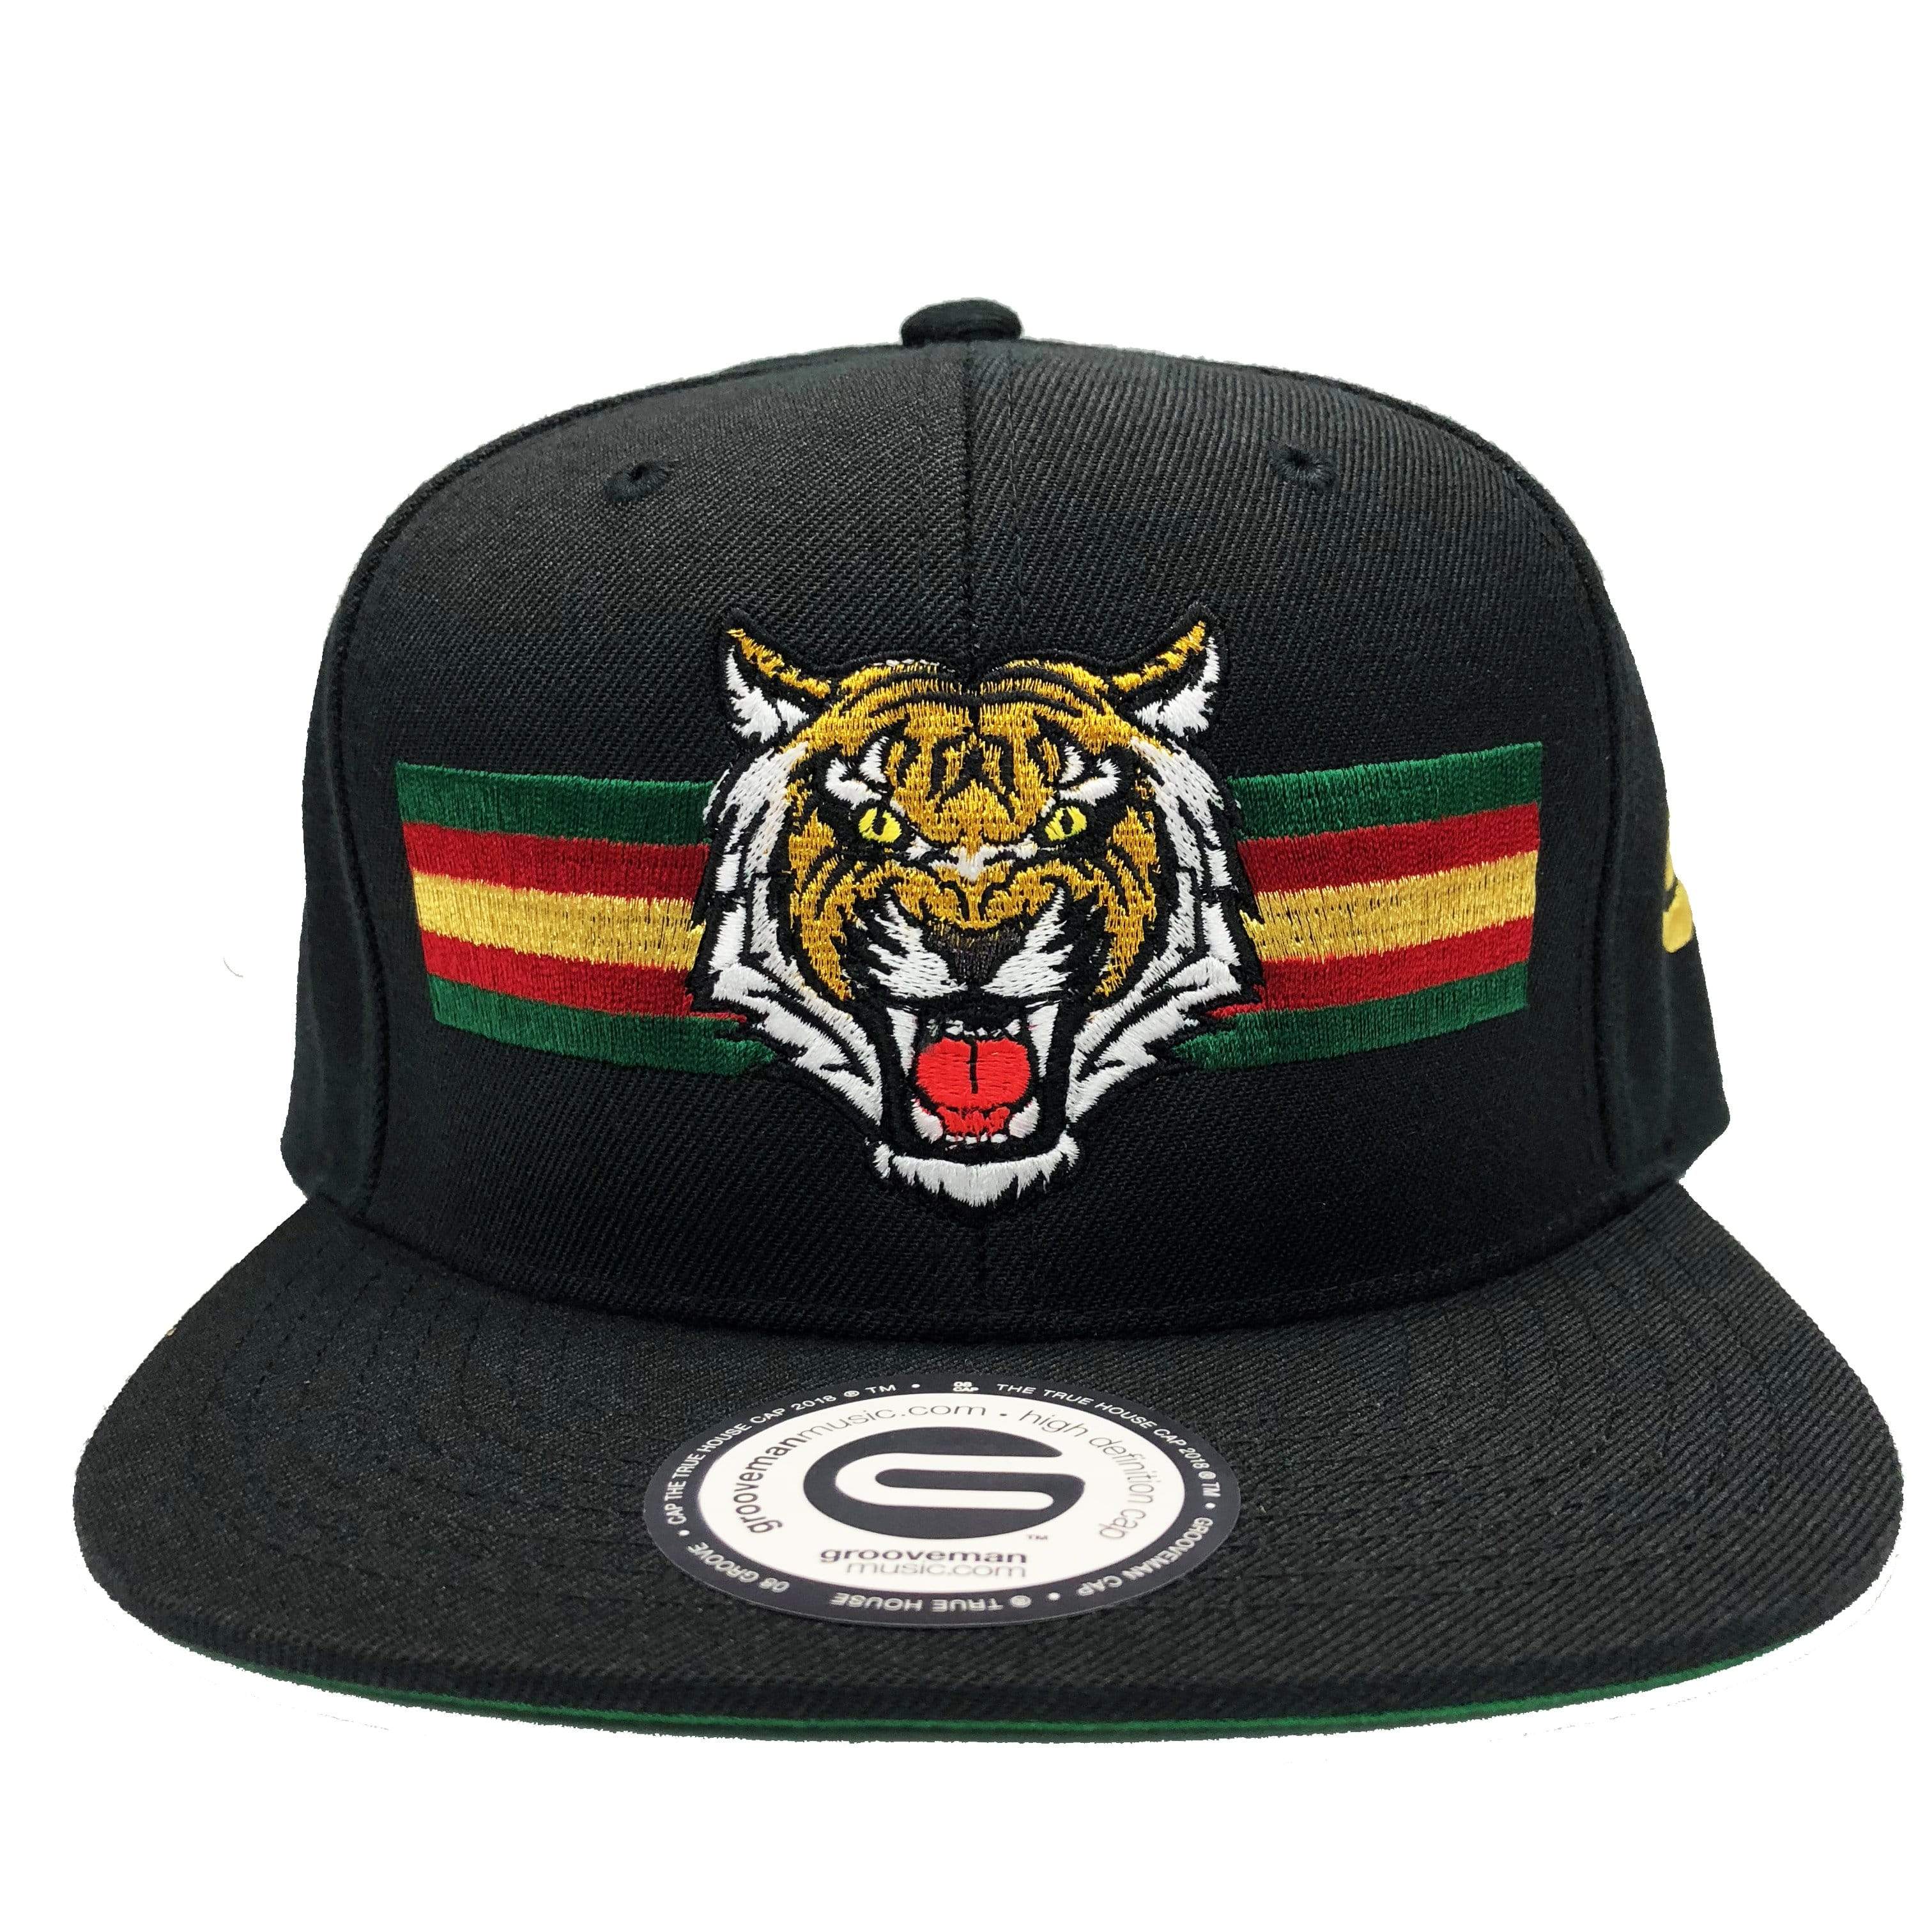 Grooveman Music Hats One Size / Black Tiger Snapback